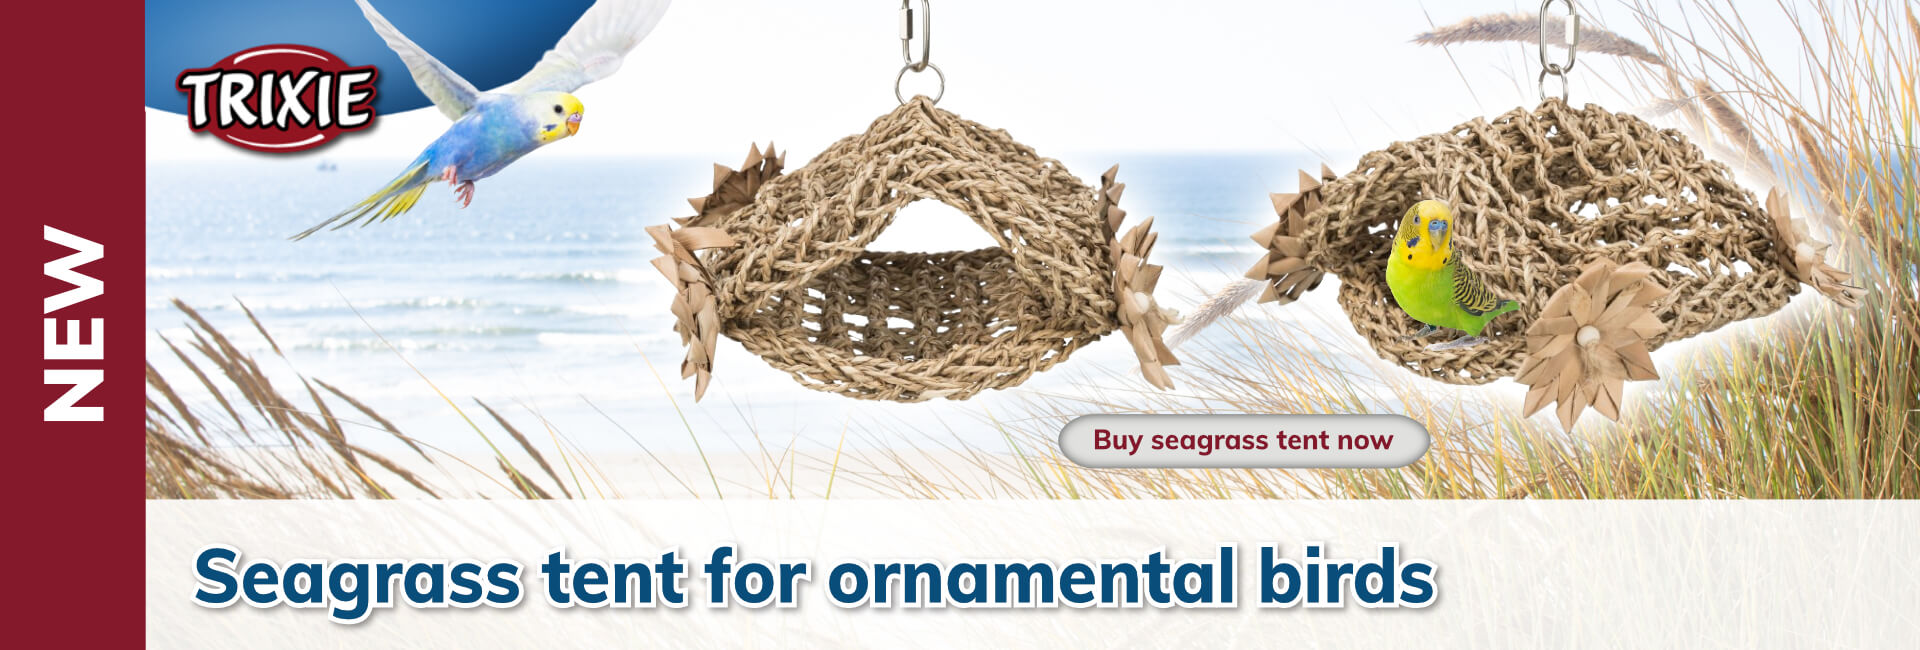 Trixie Seagrass tent for ornamental birds